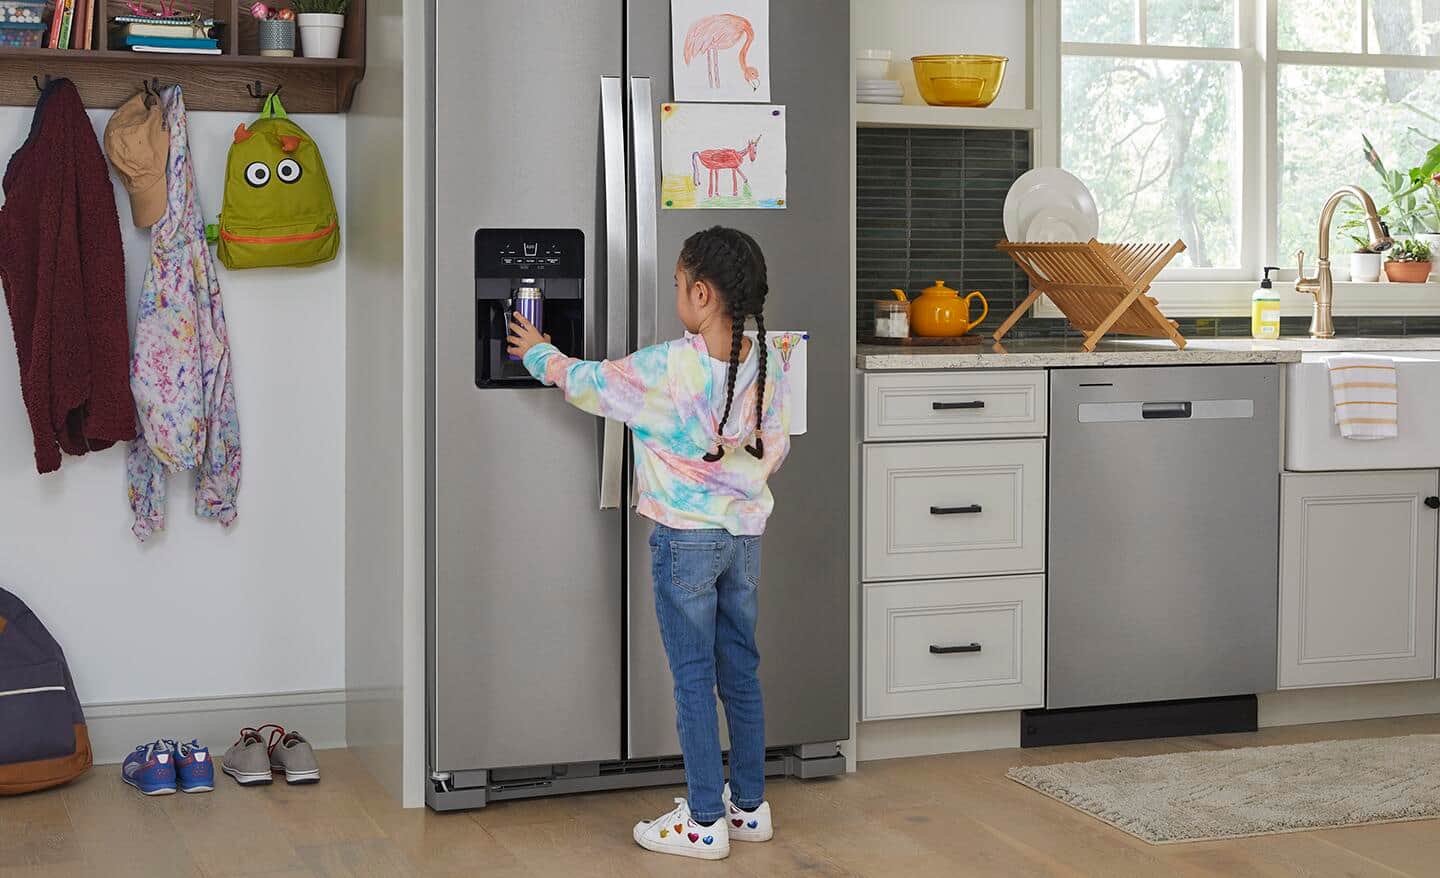 Child getting water from refrigerator dispenser.